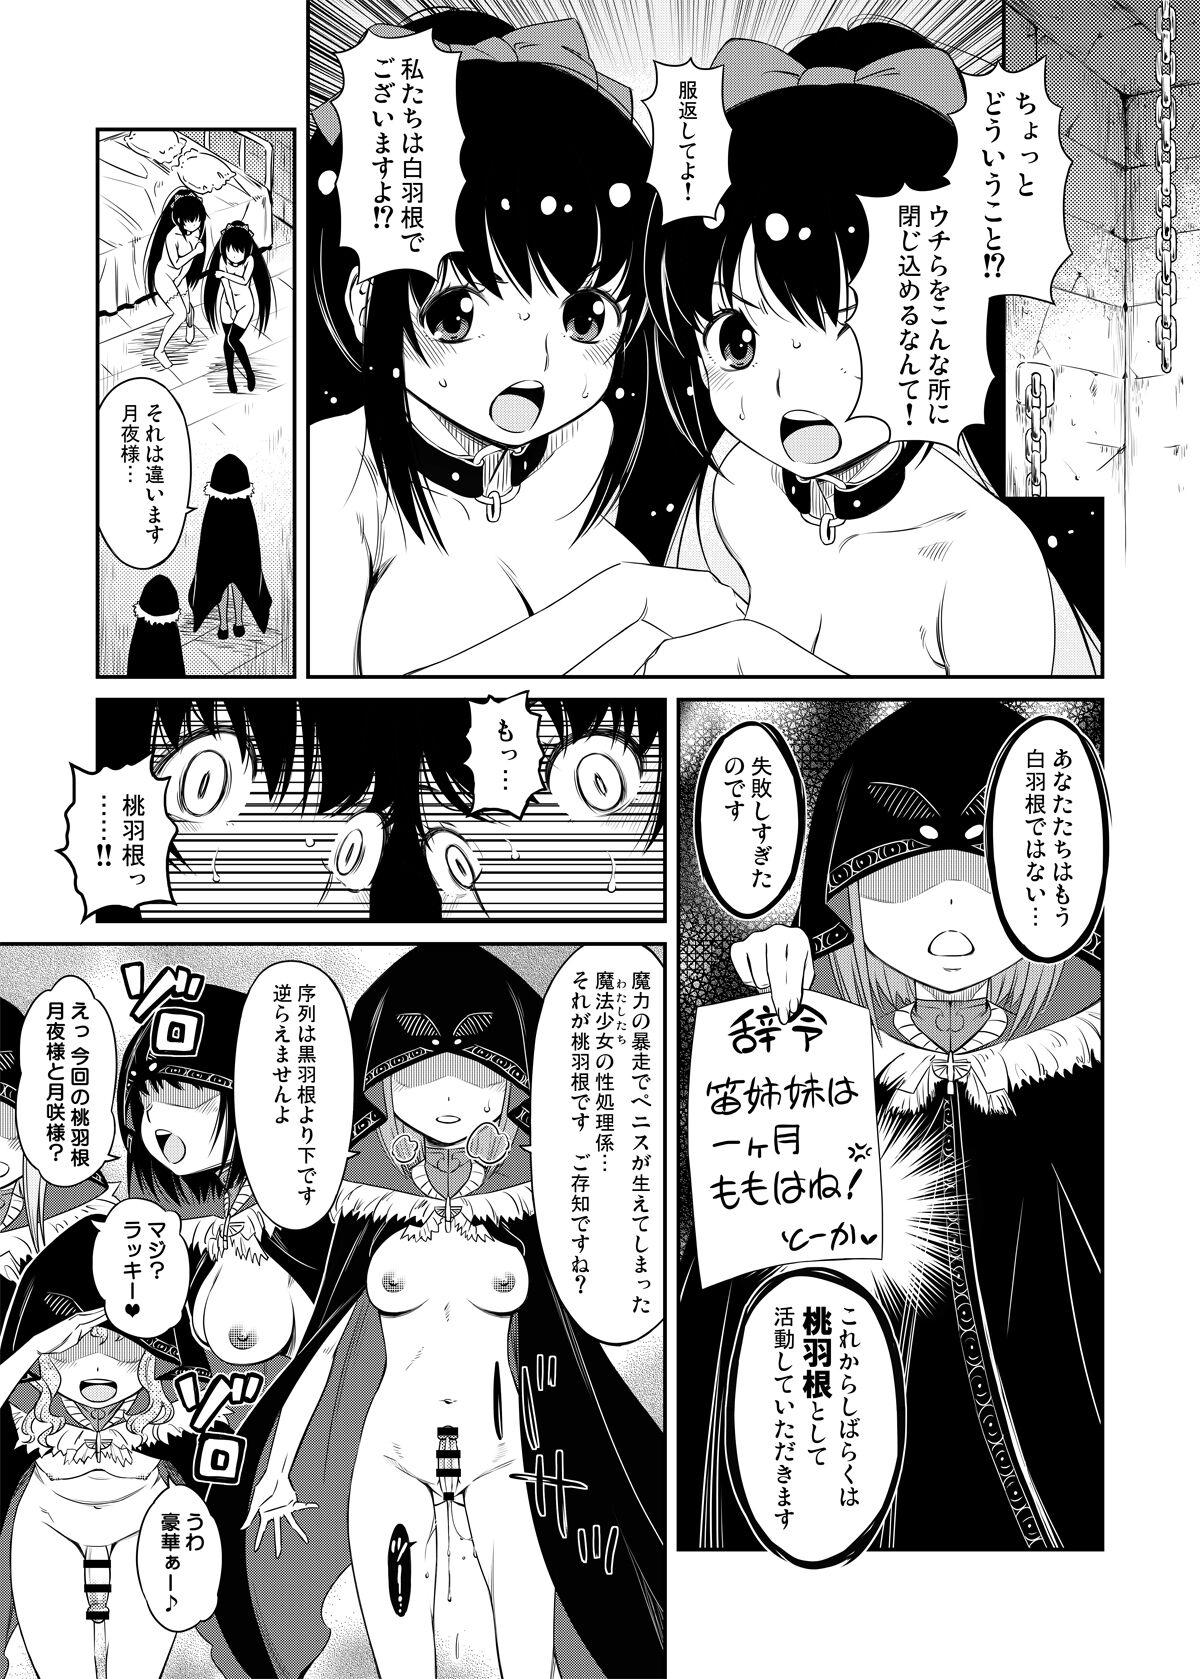 The Amane sisters' Erotic Manga 1